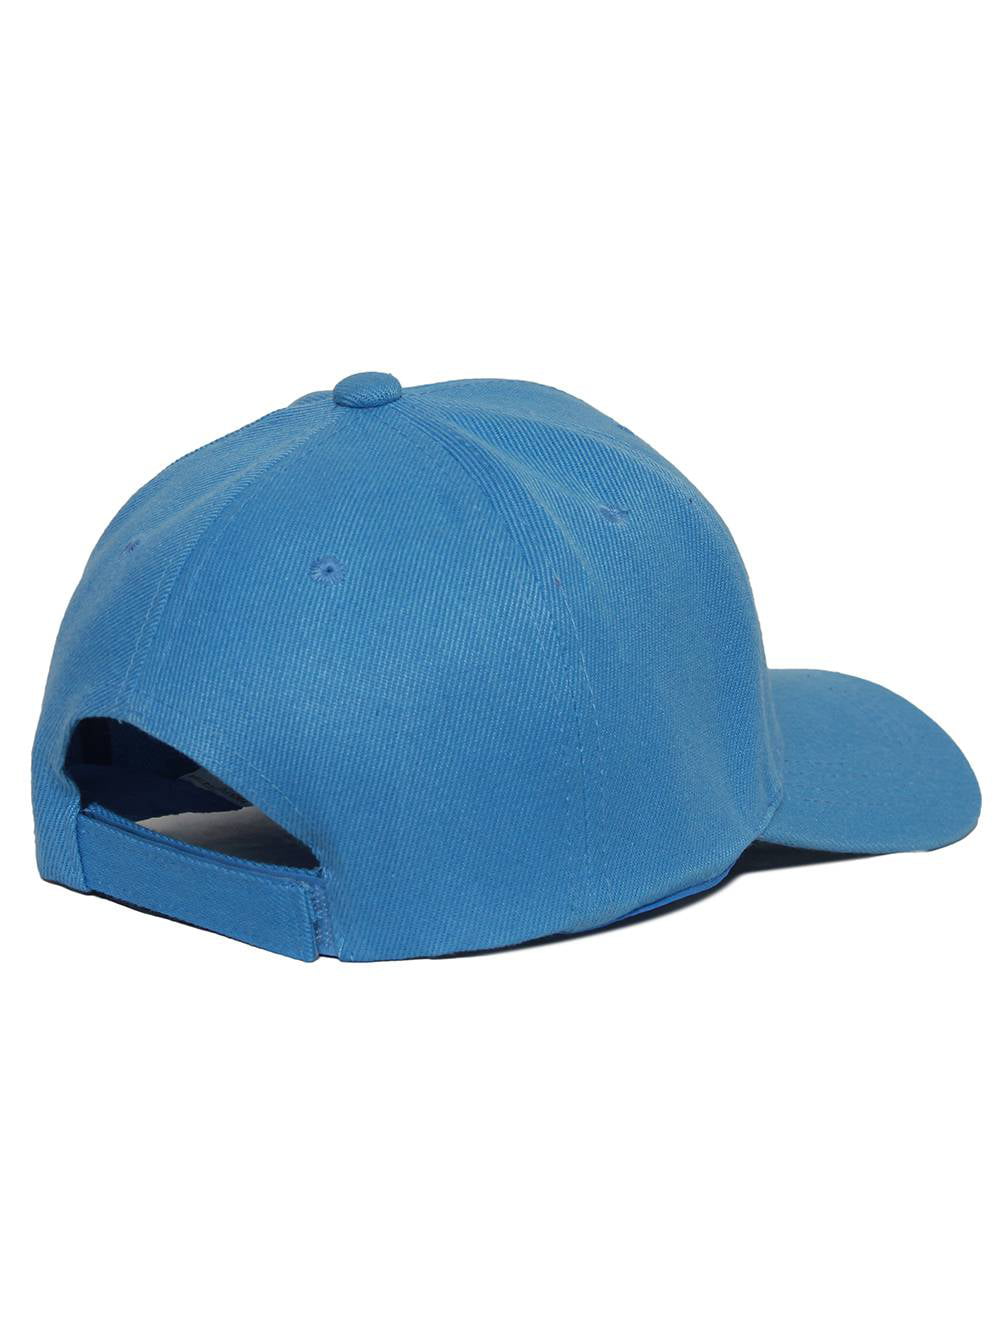 Top Headwear 12-Pack Adjustable Baseball Hat - Sky Blue | Walmart Canada